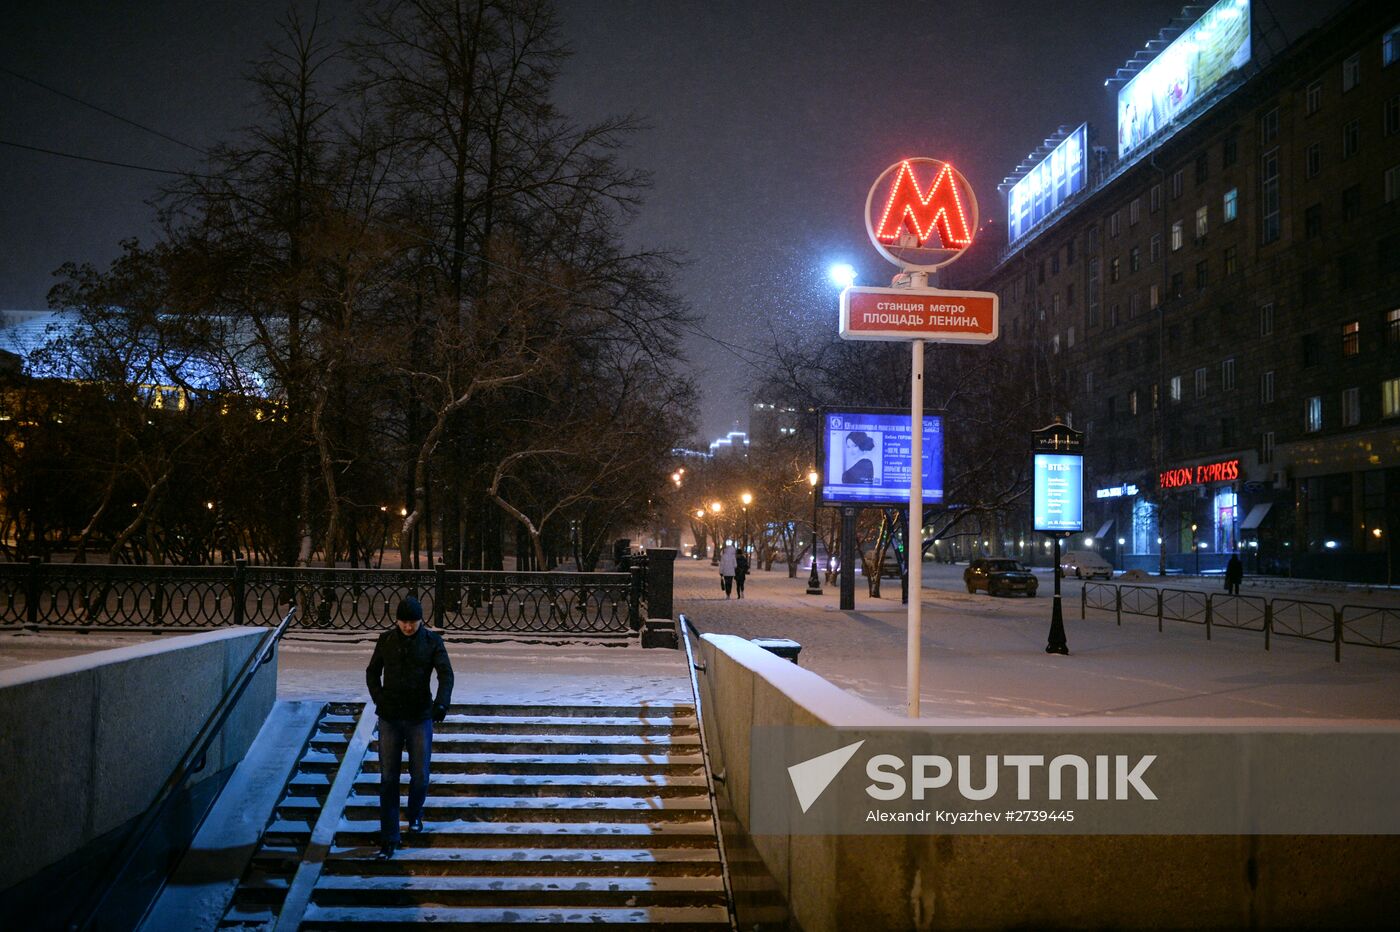 Novosibirsk Region in winter